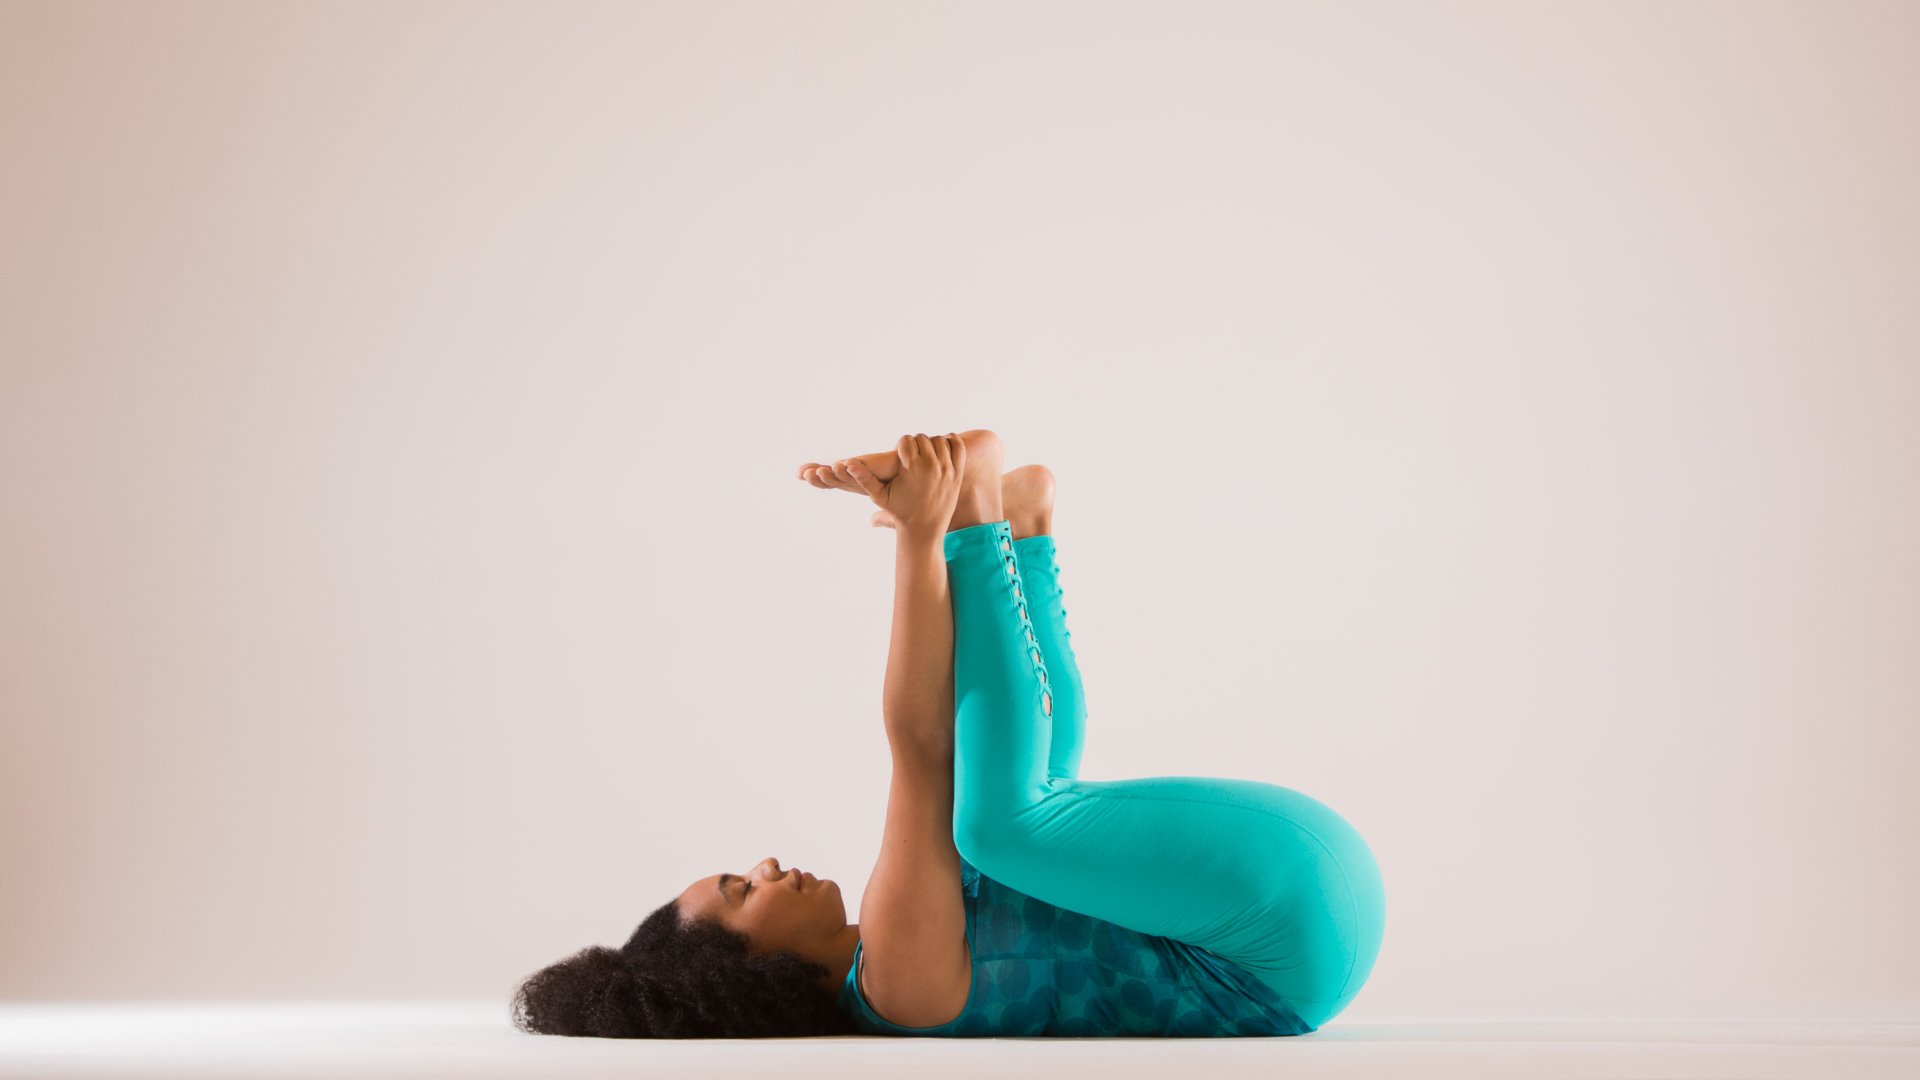 40 Hatha Yoga Poses - Yoga Paper